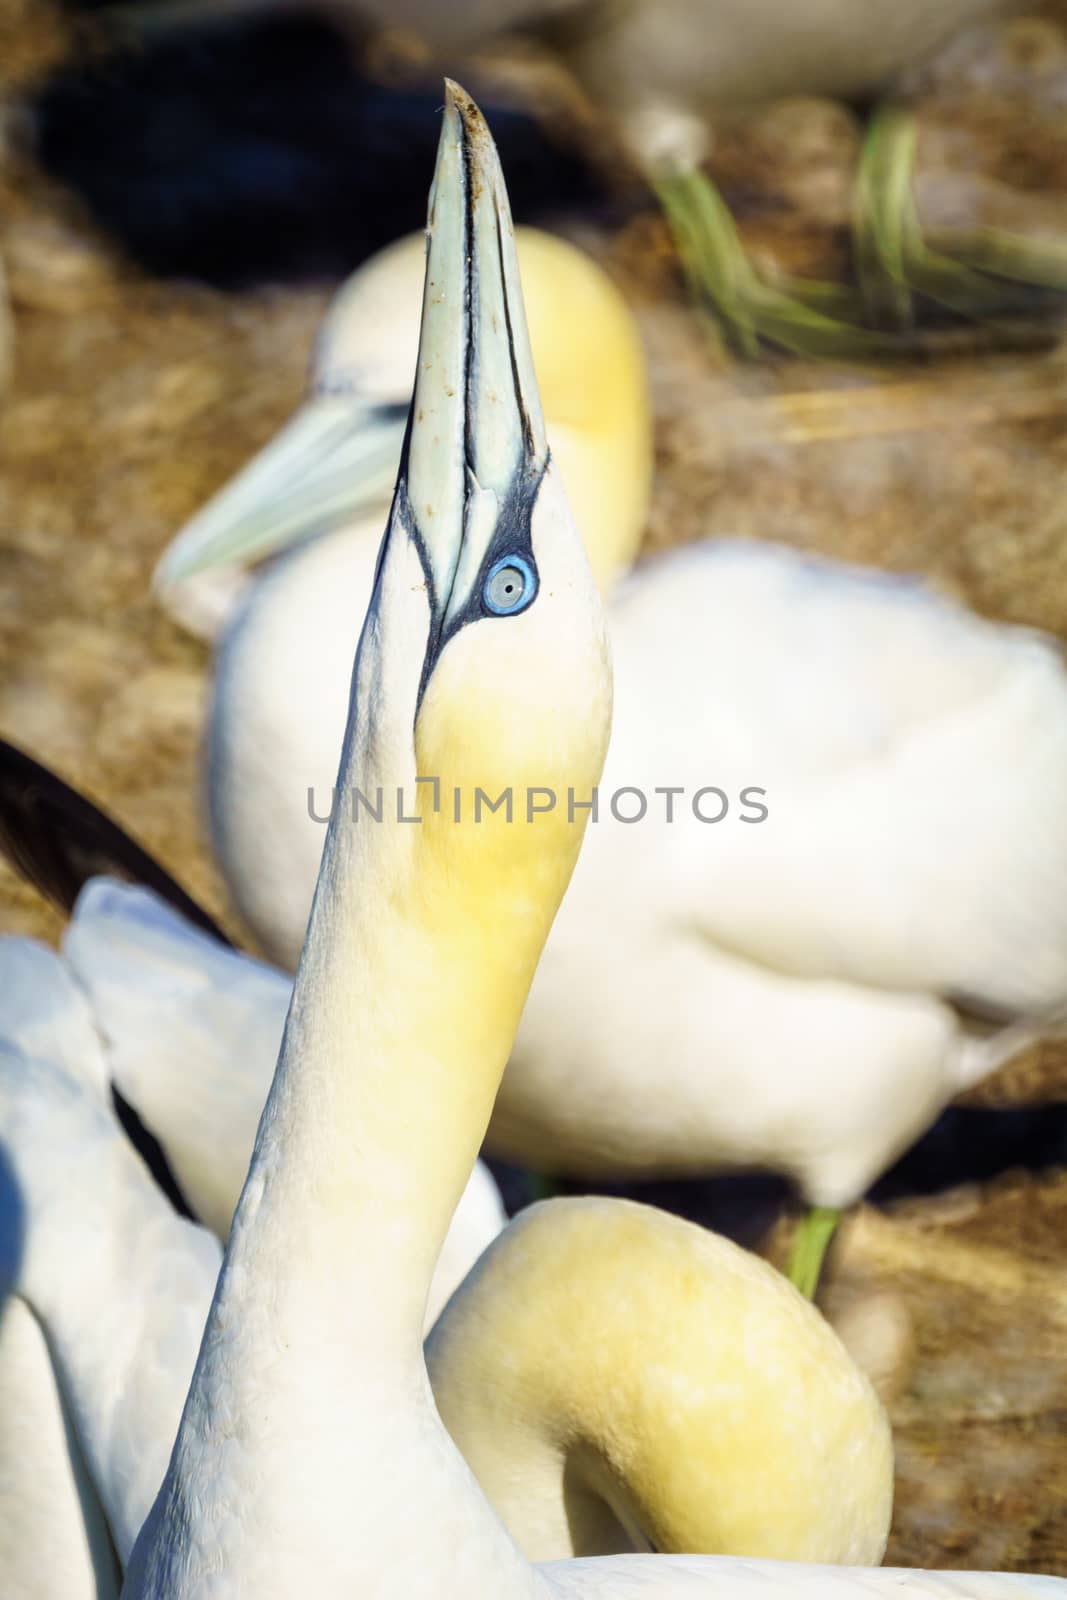 Gannet birds in the Bonaventure Island by RnDmS